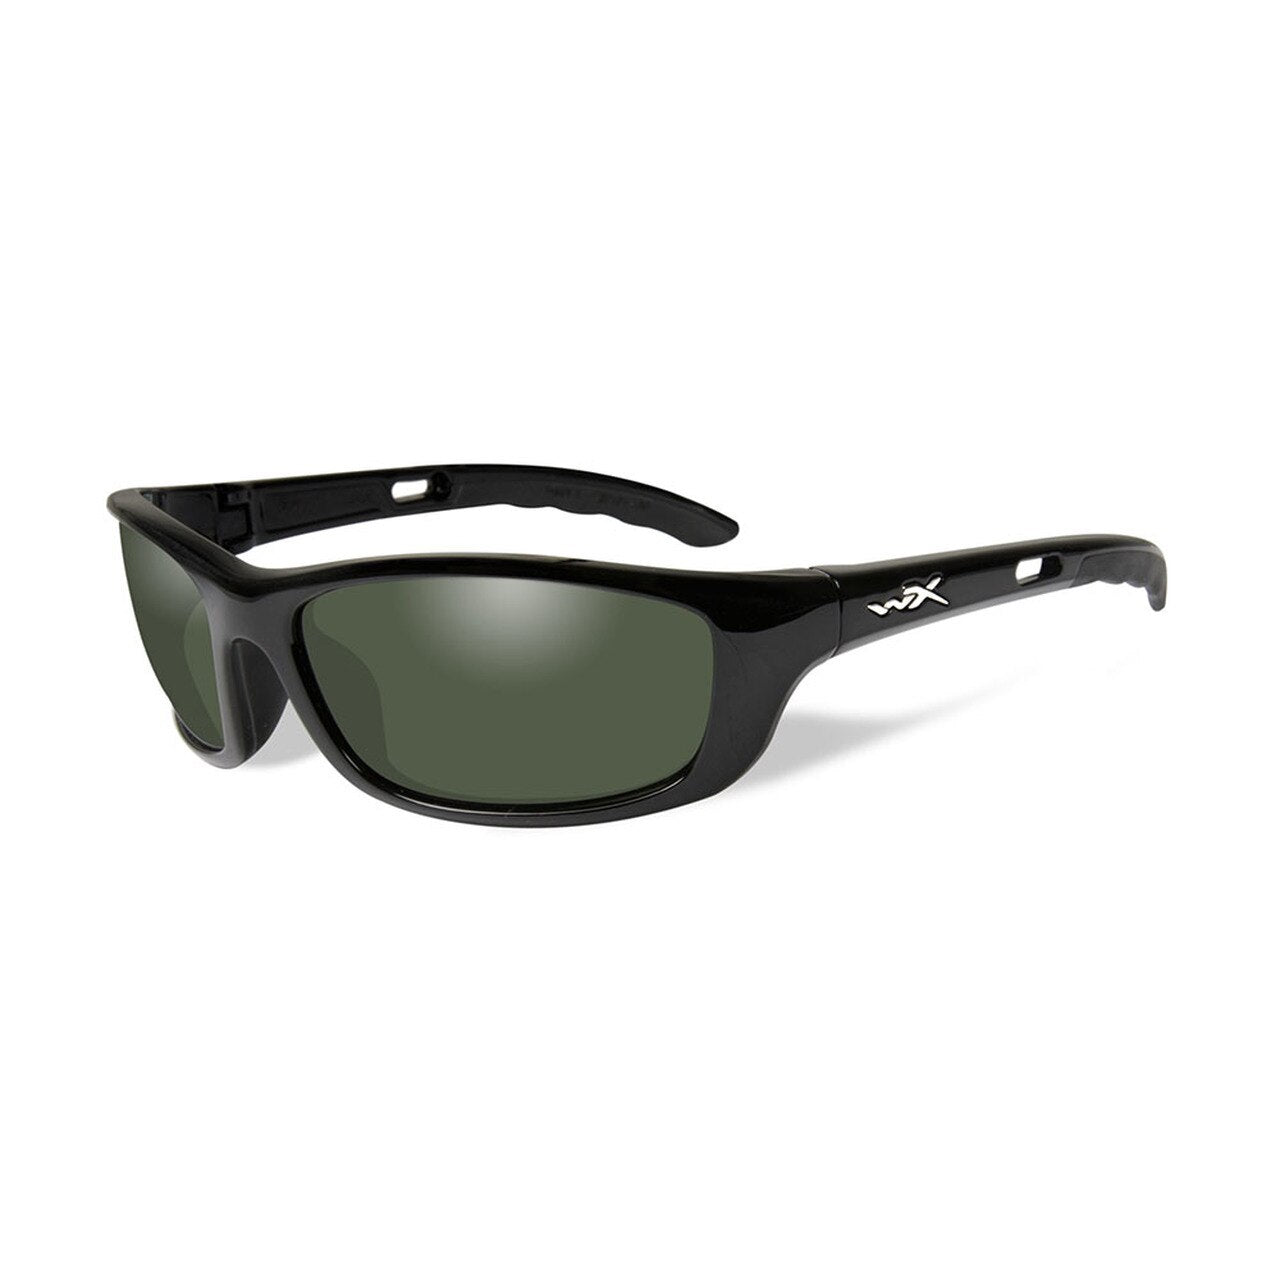 Wiley X P17 Sunglasses Polarised Green Lens Gloss Black Frame Tactical Distributors Ltd New Zealand